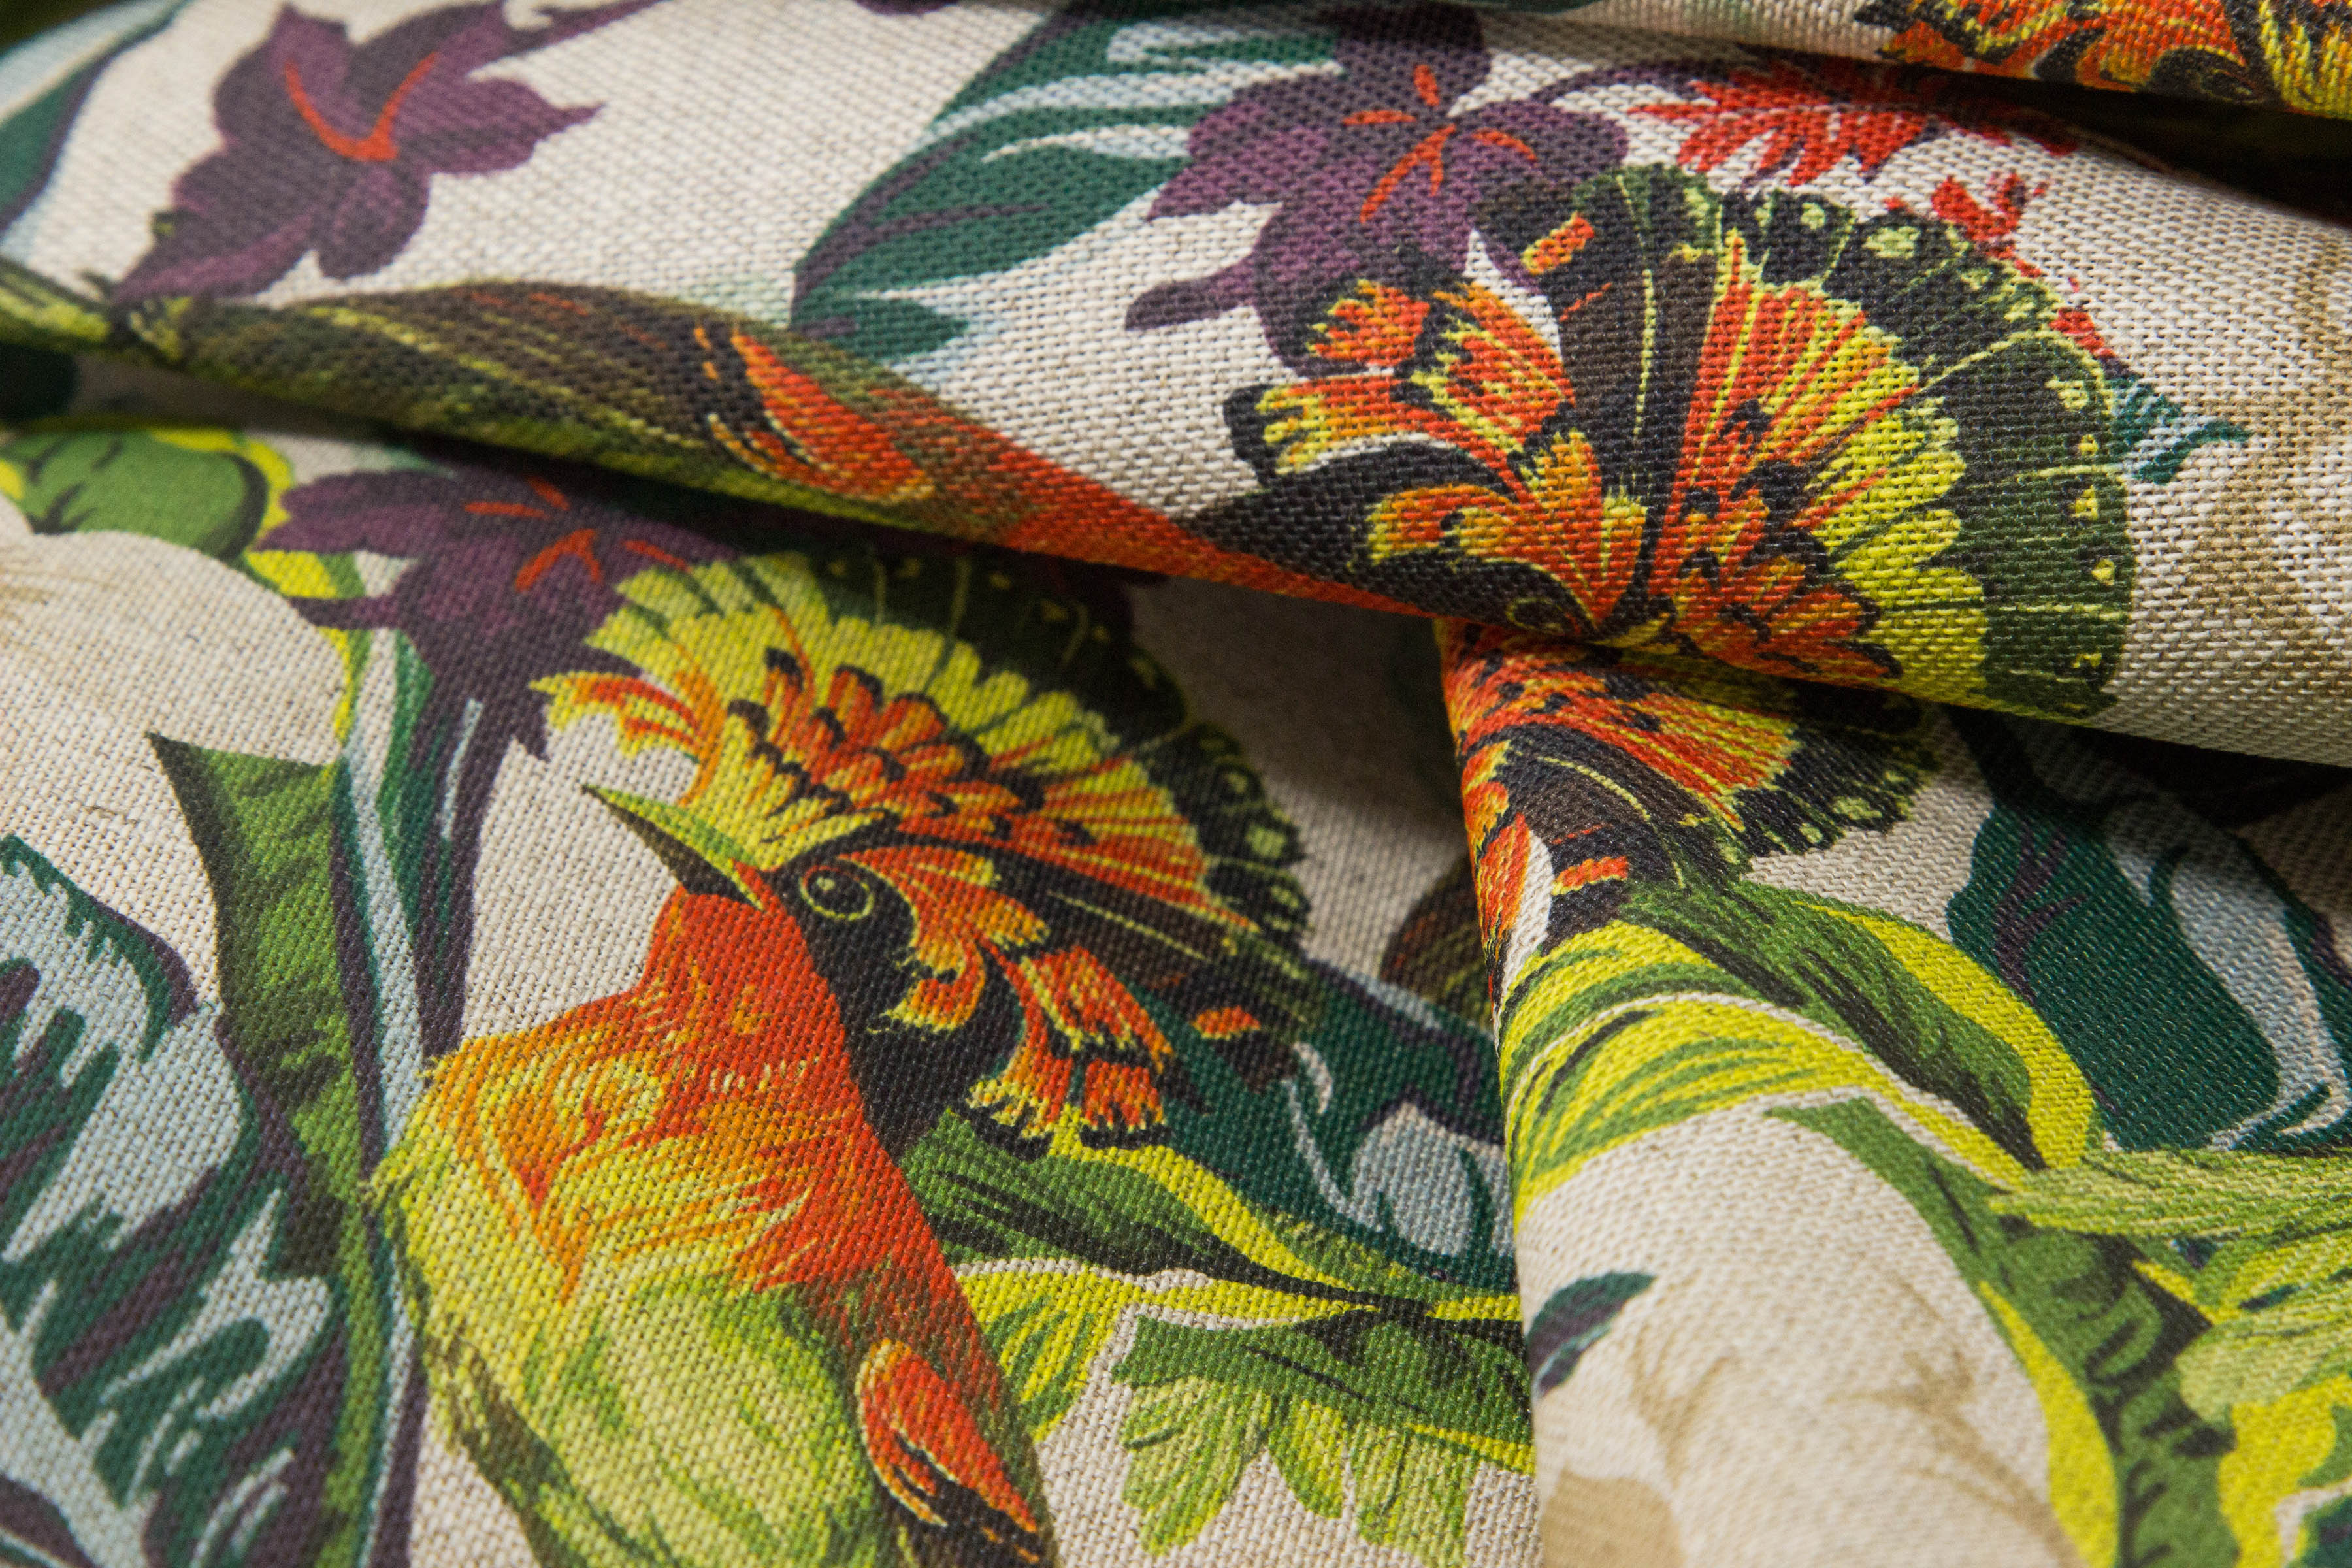 British Natural Linen fabric custom printed on demand in an exotic bird design.